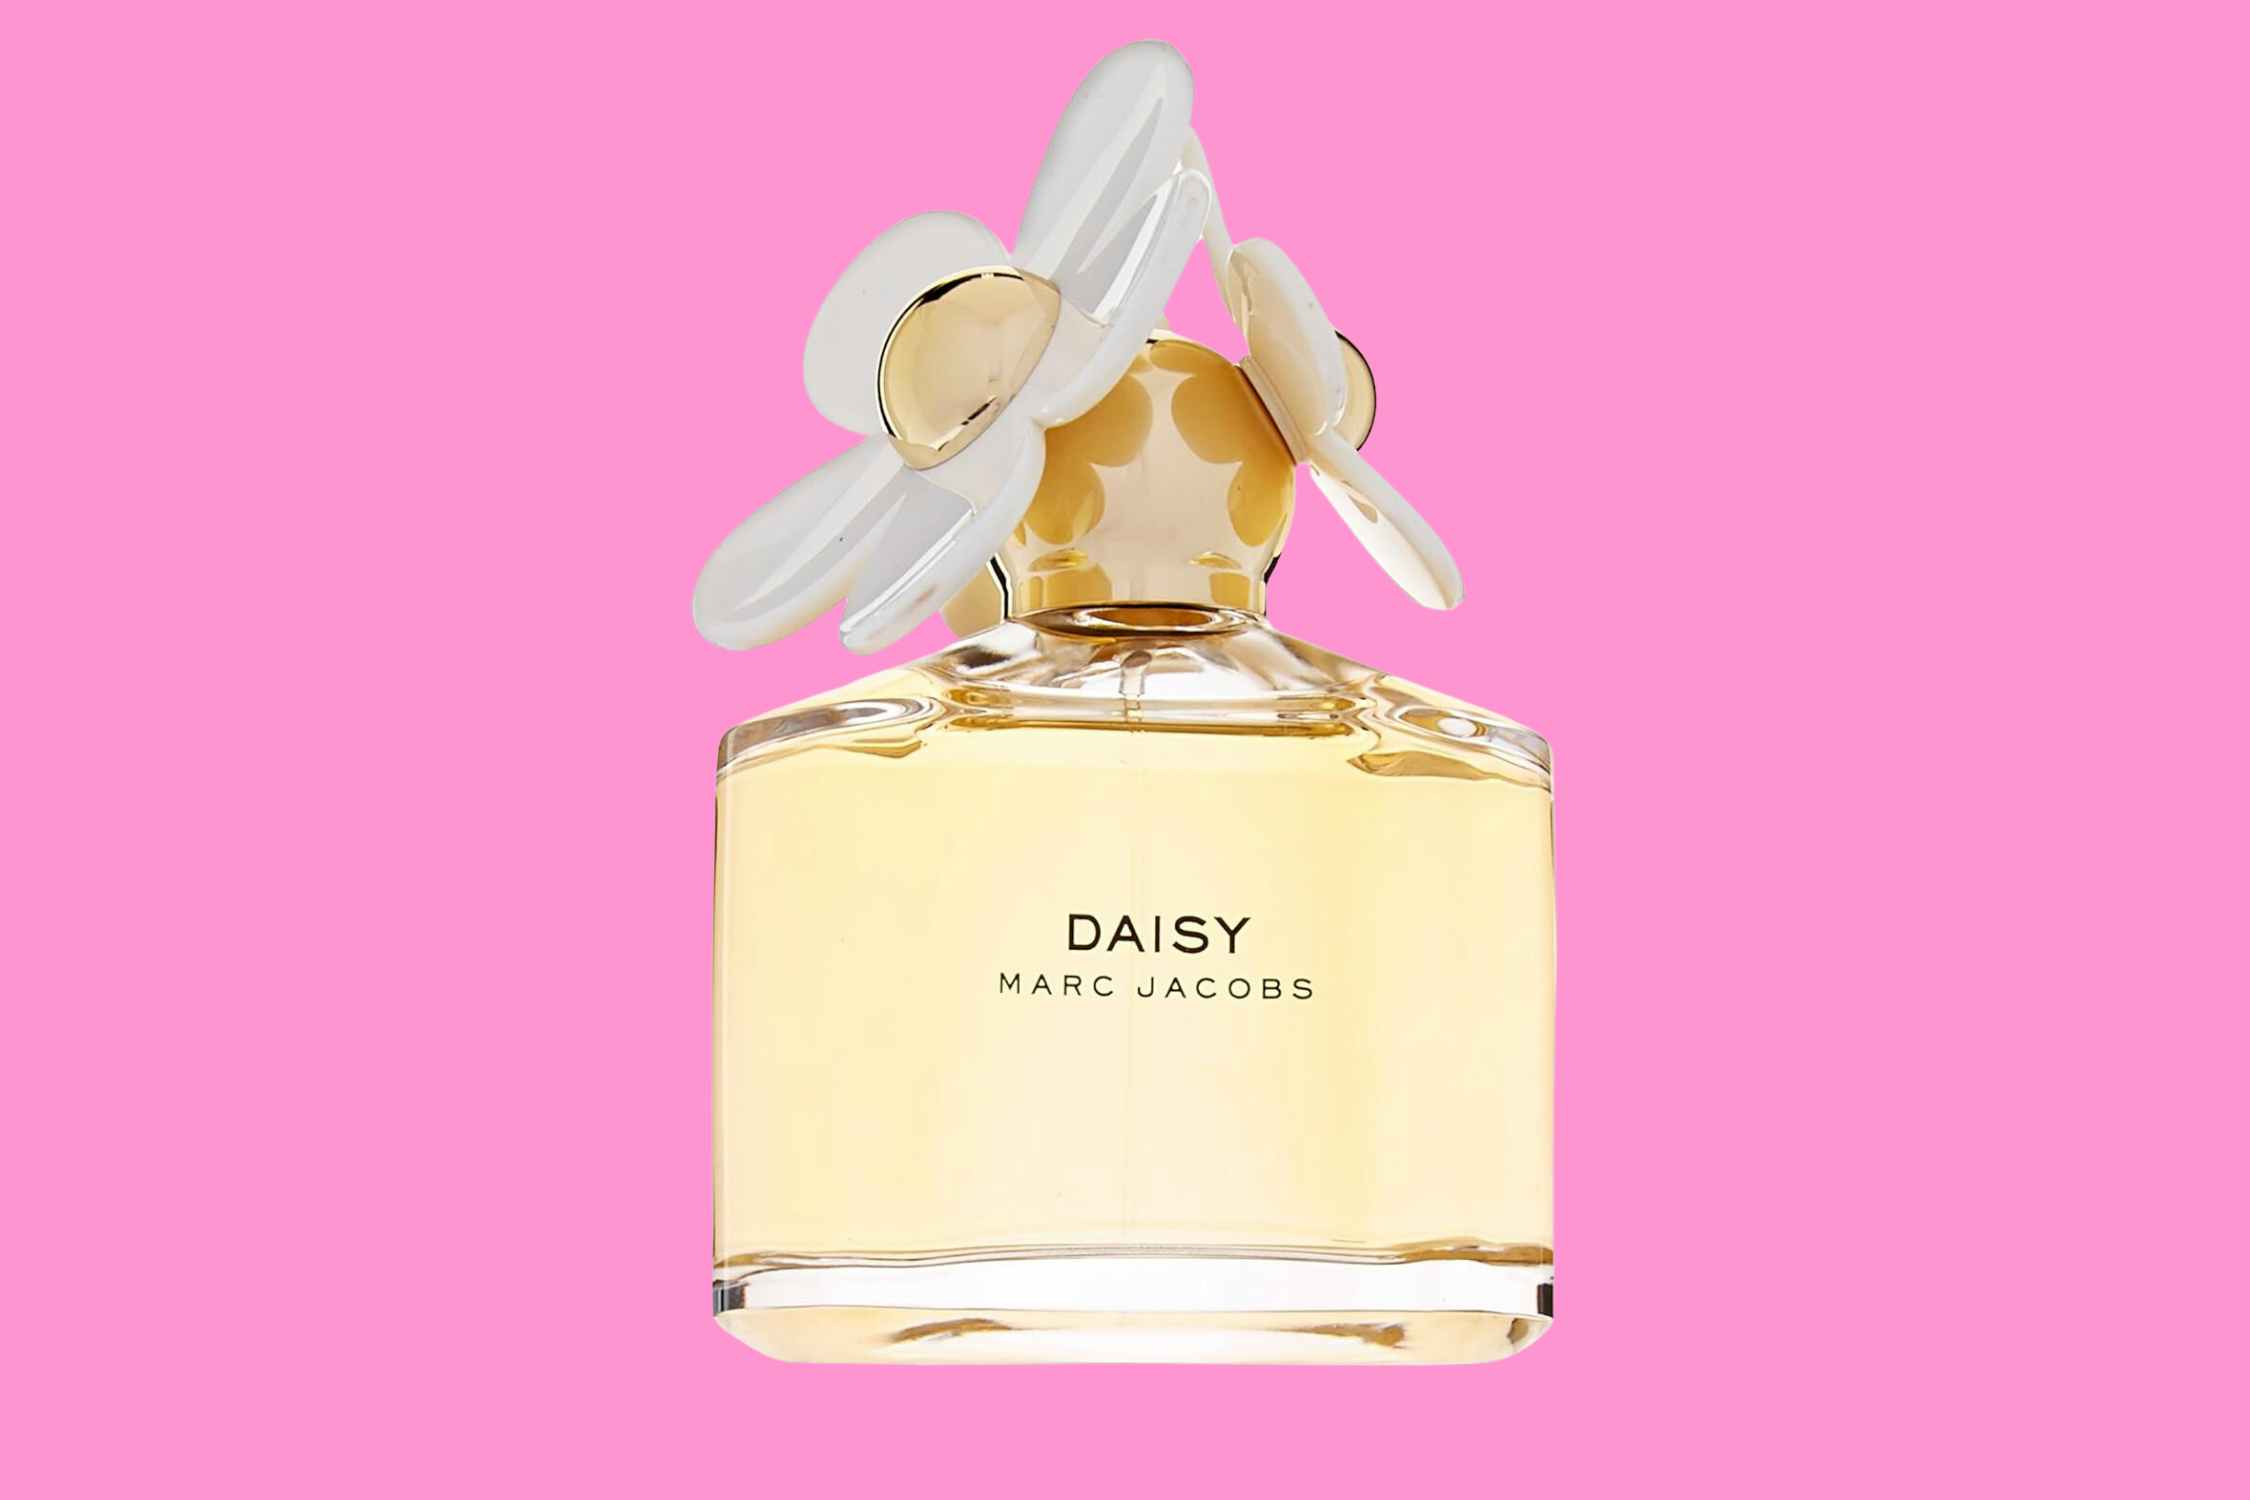 Marc Jacobs Daisy Perfume, as Low as $38 on Amazon (Reg. $87)